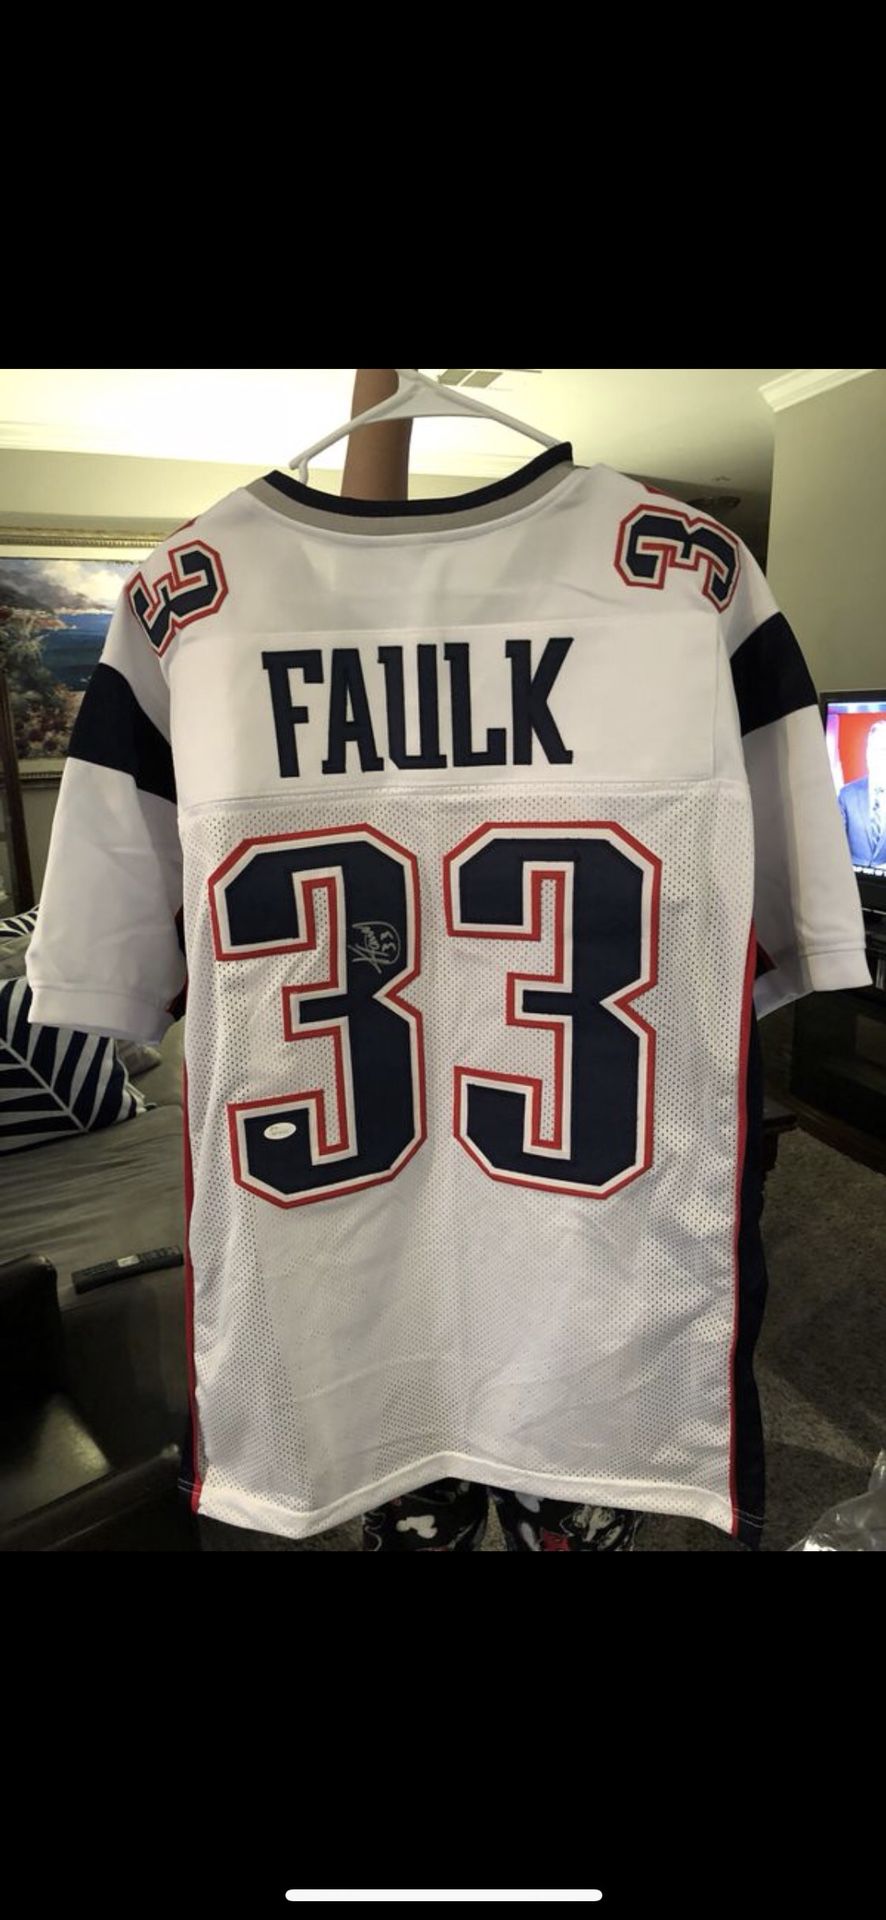 Kevin Faulk Autographed white custom jersey XL JSA certified $120